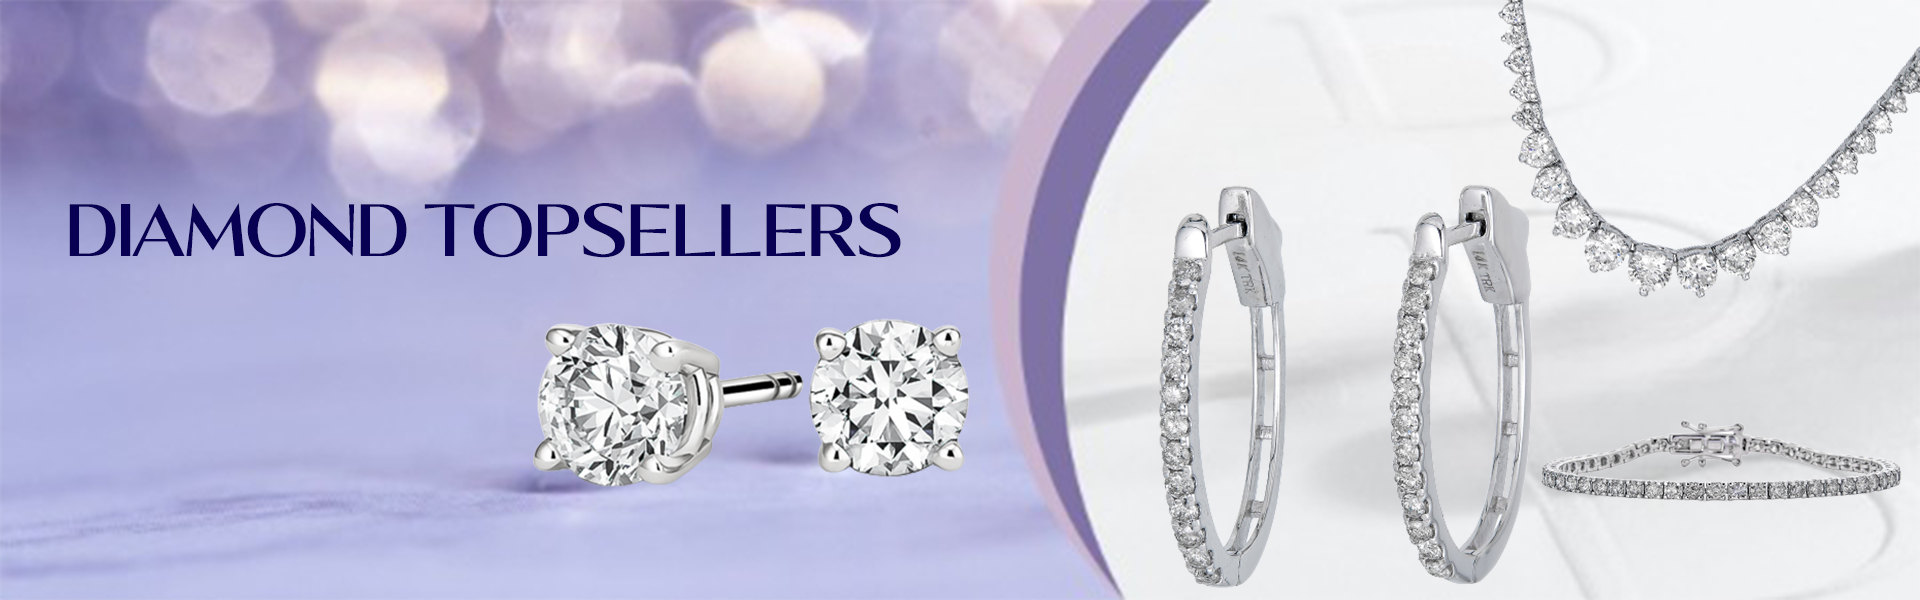 Topseller Diamond Jewelry